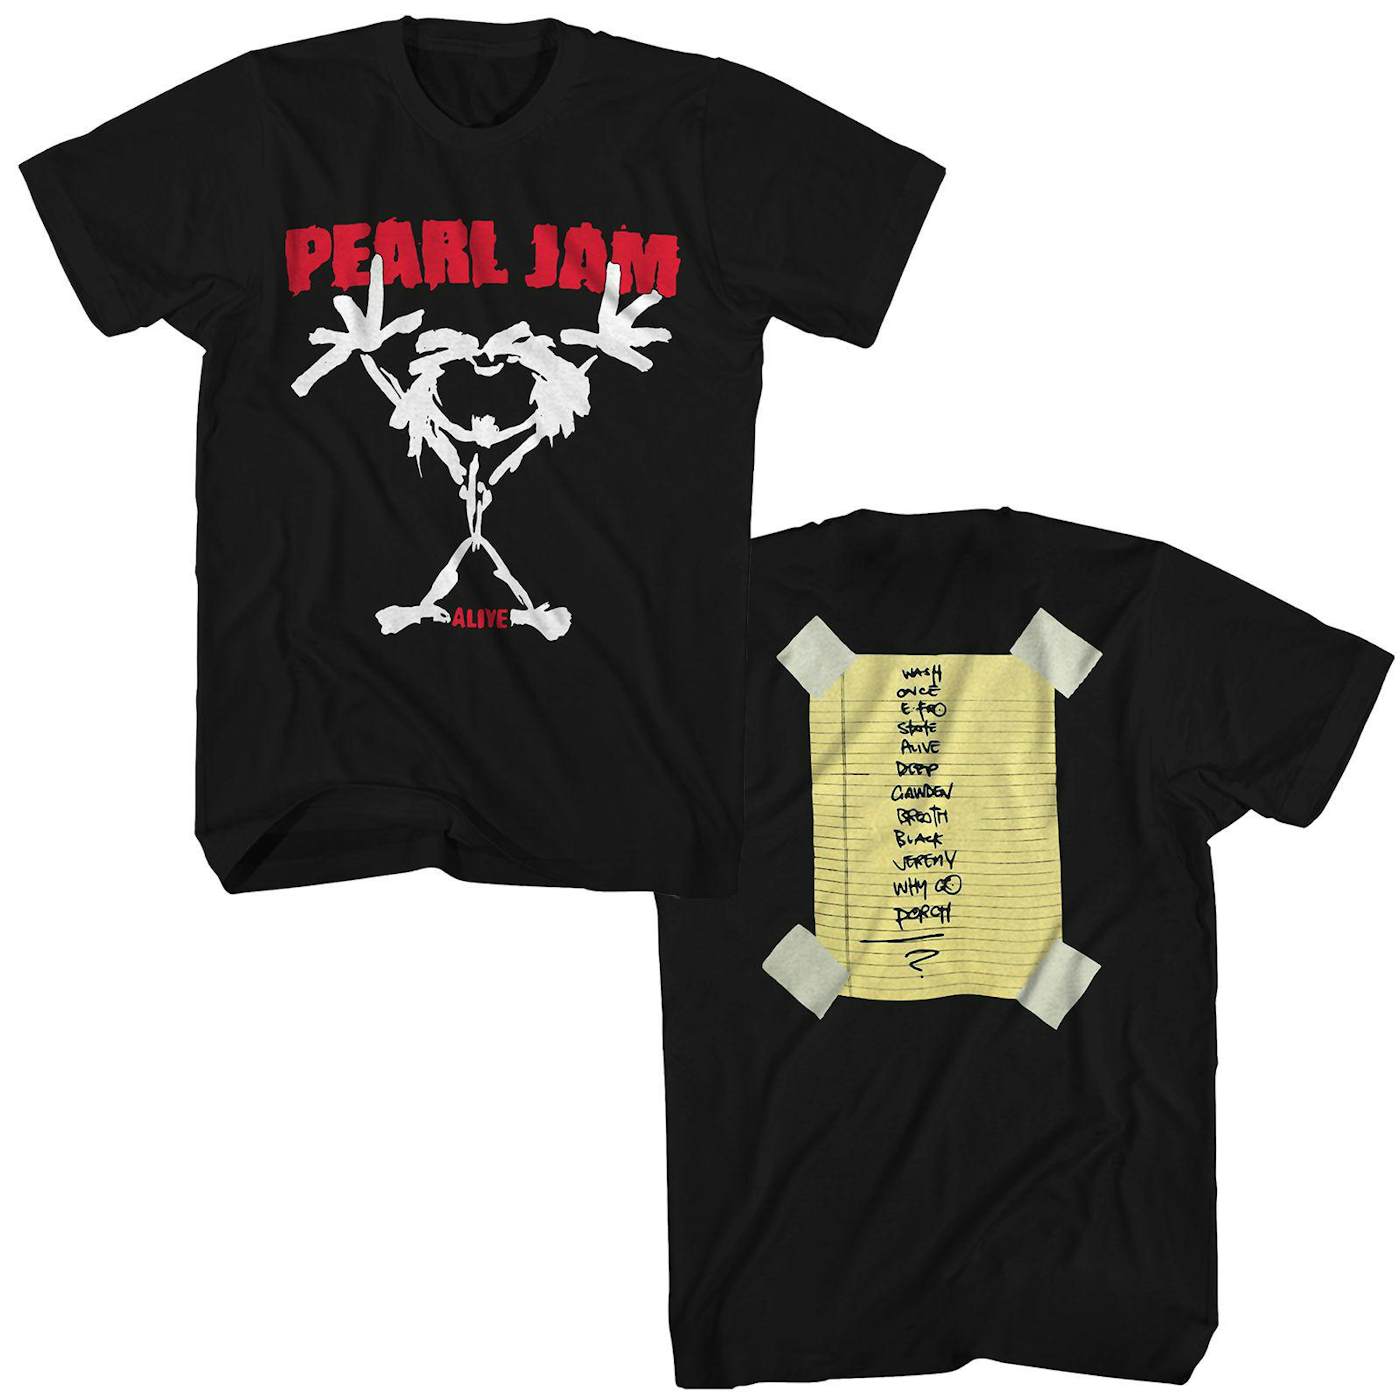 Pearl Jam - Stickman. What's your favorite Pearl Jam shirt?